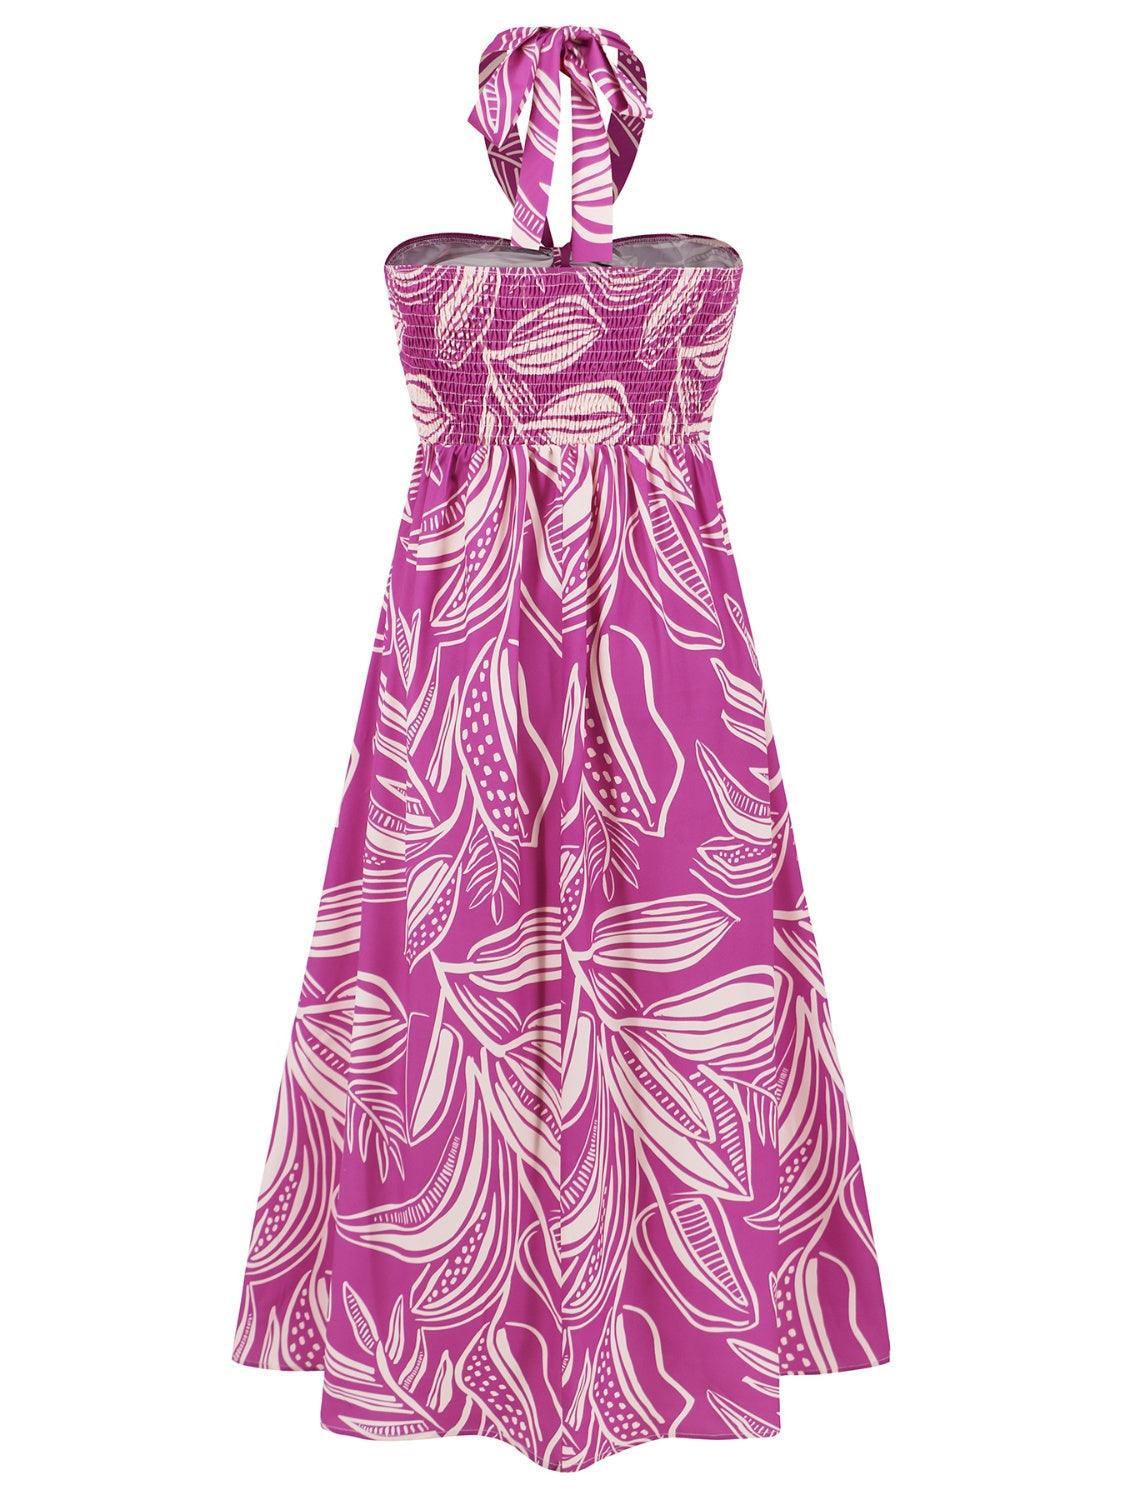 Bona Fide Fashion - Printed Halter Neck Midi Cami Dress - Women Fashion - Bona Fide Fashion